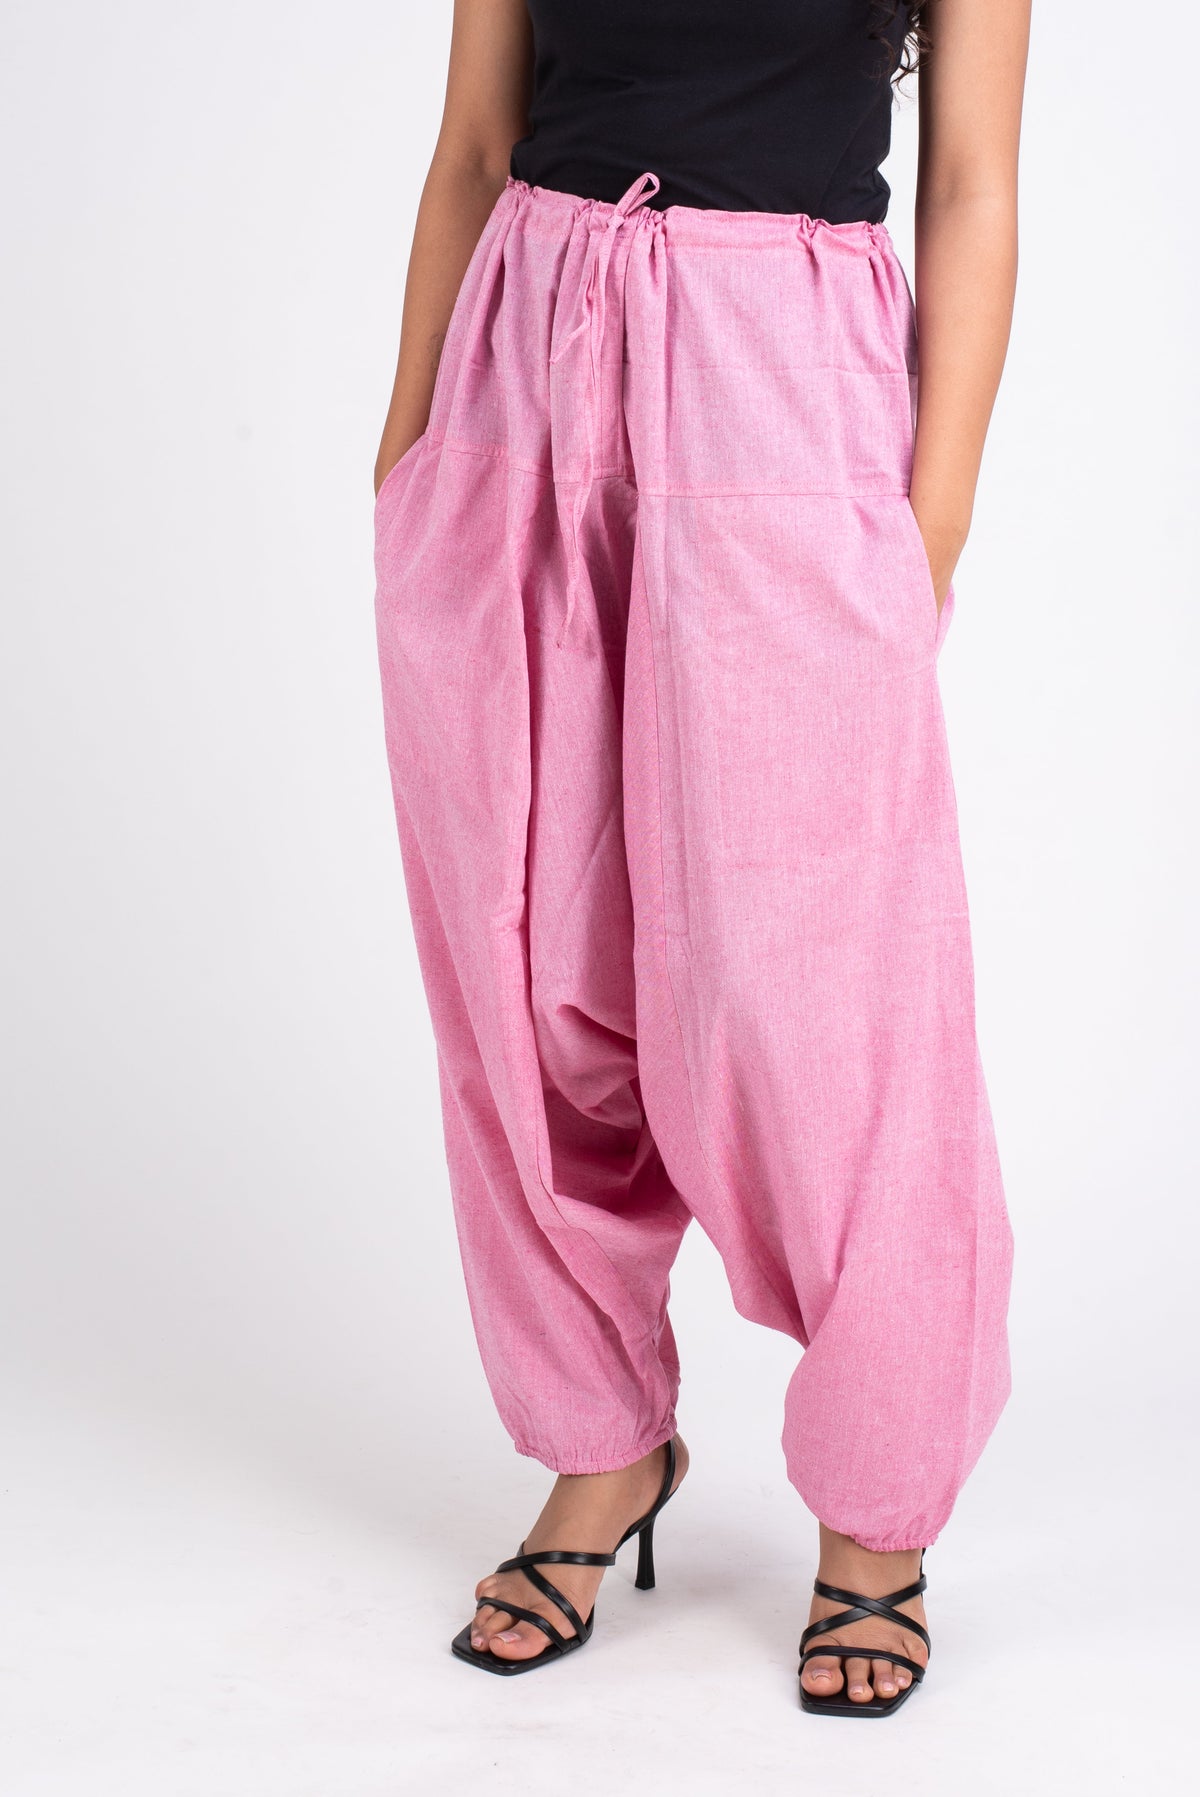 582-Pink Whitelotus Women's Pants"Yoga pants"